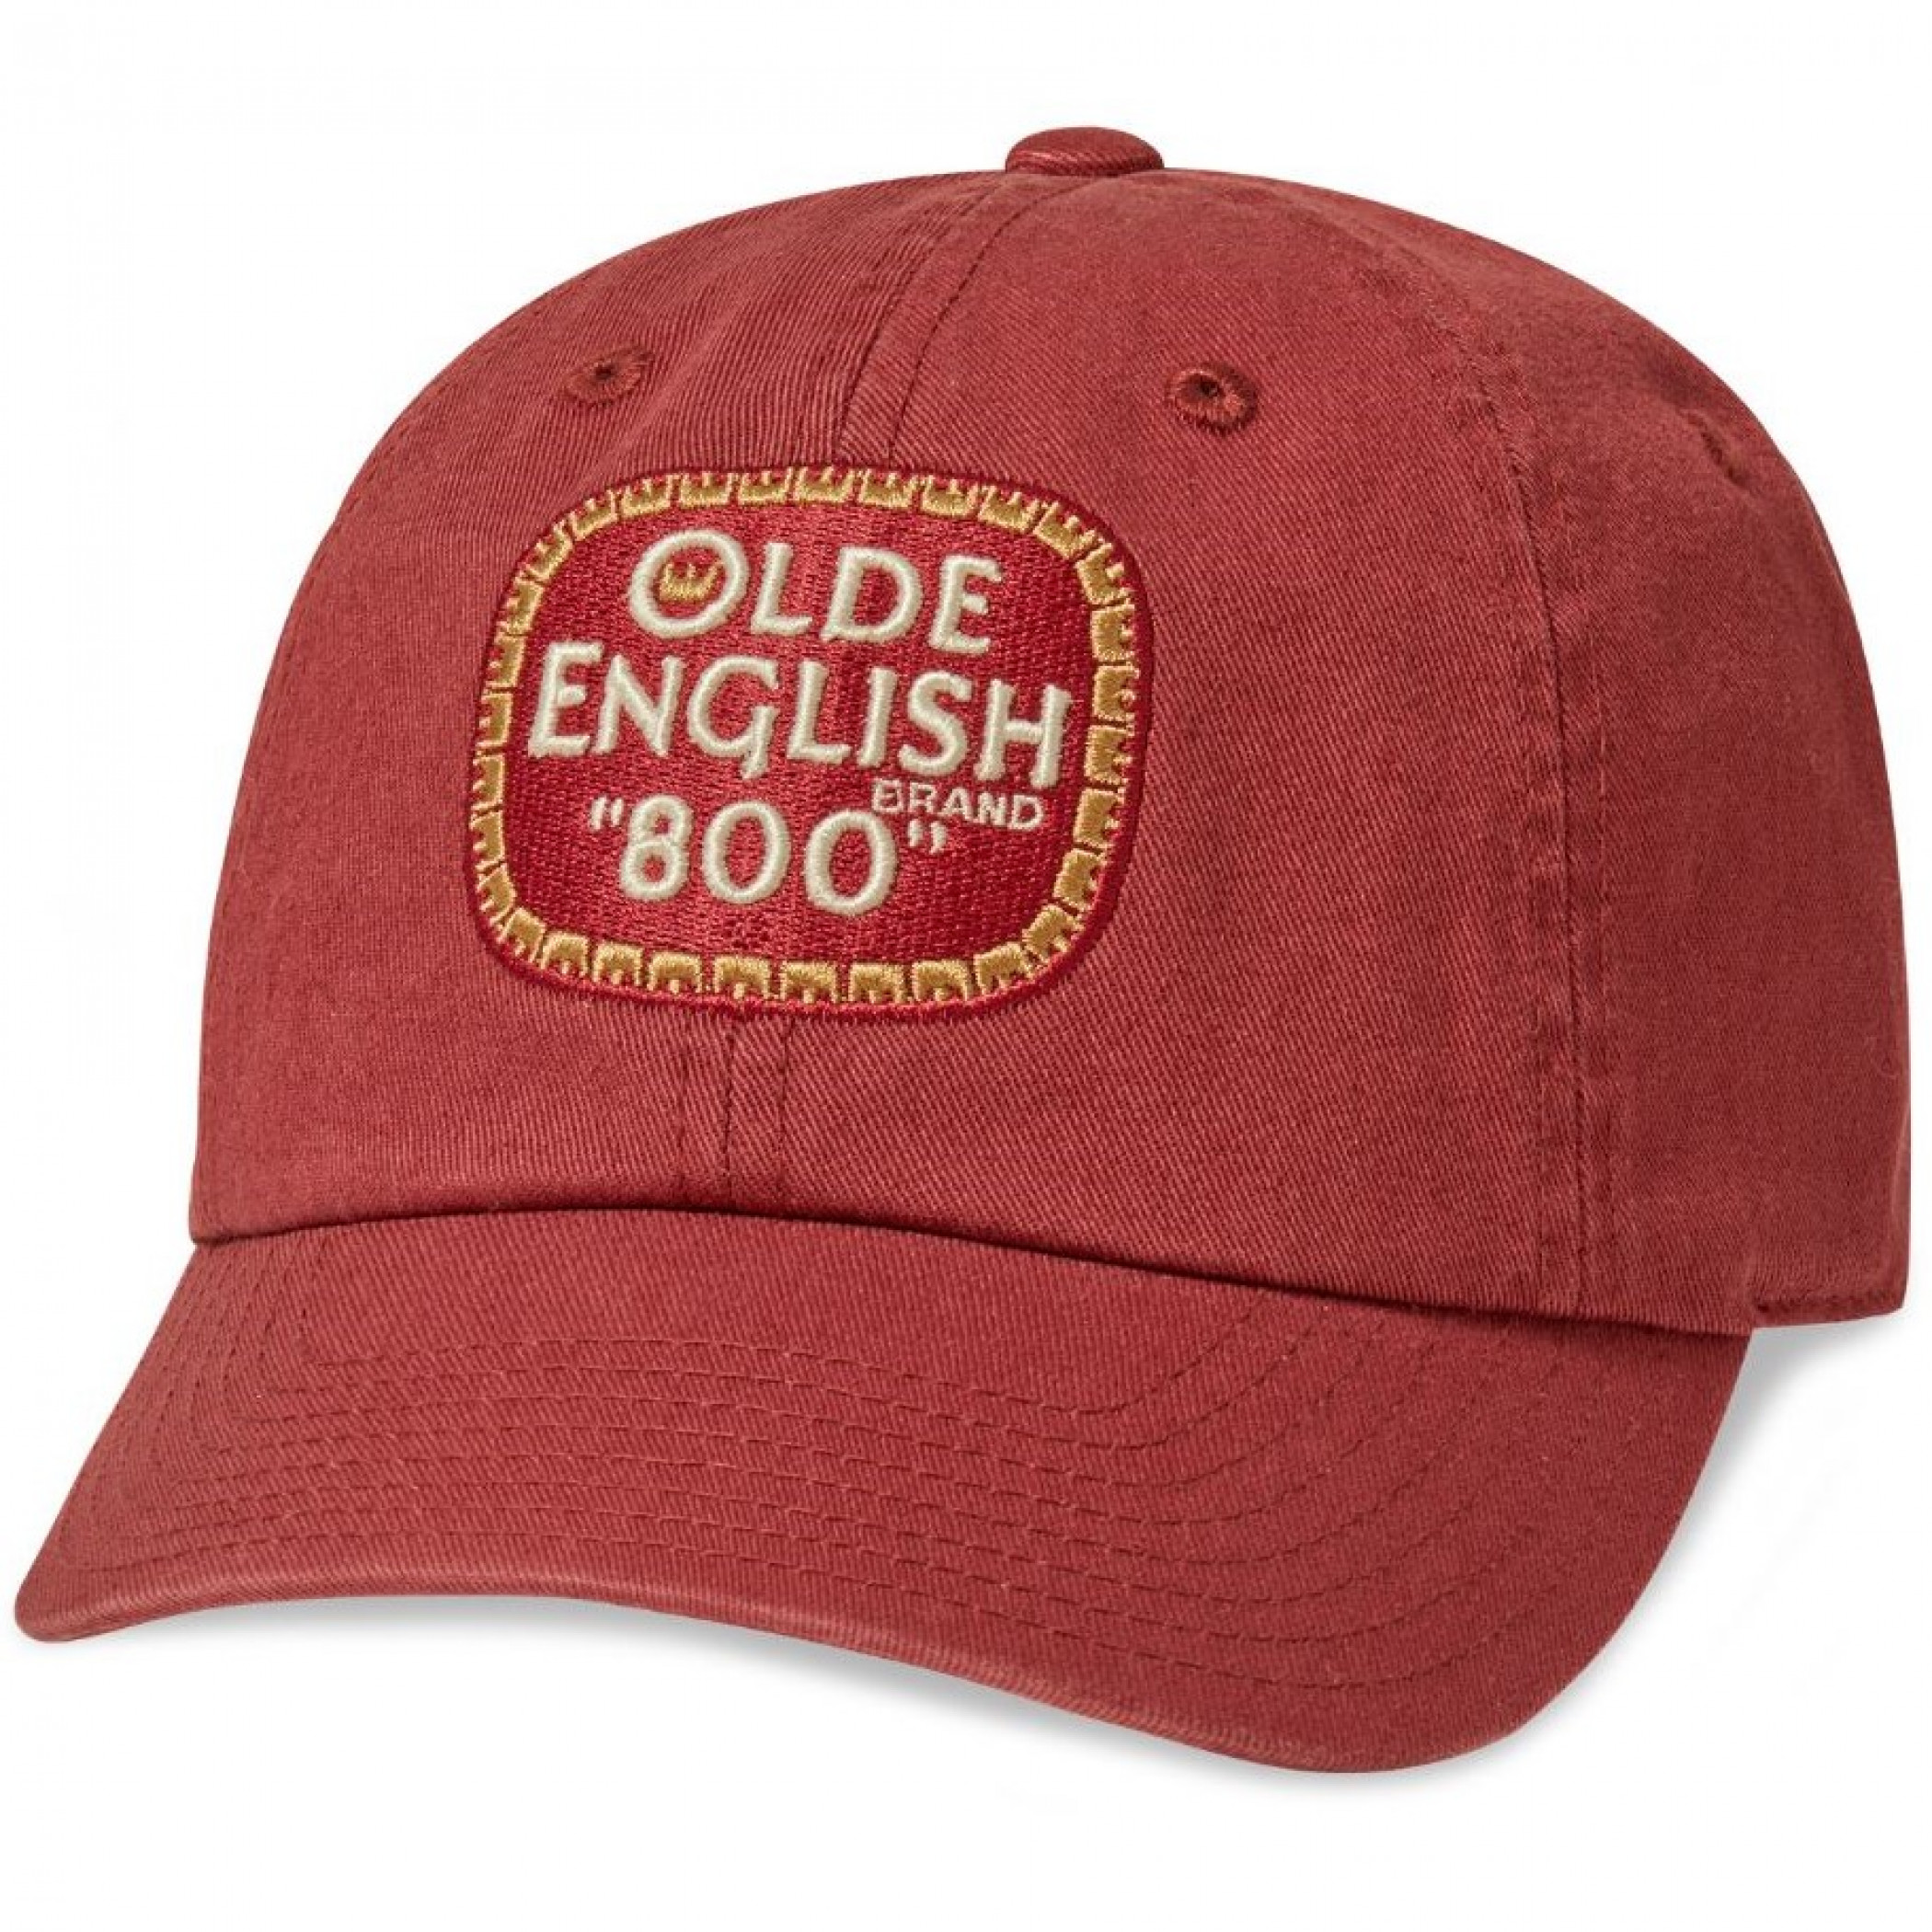 Olde English "800" Brand Logo Adjustable Ballpark Hat